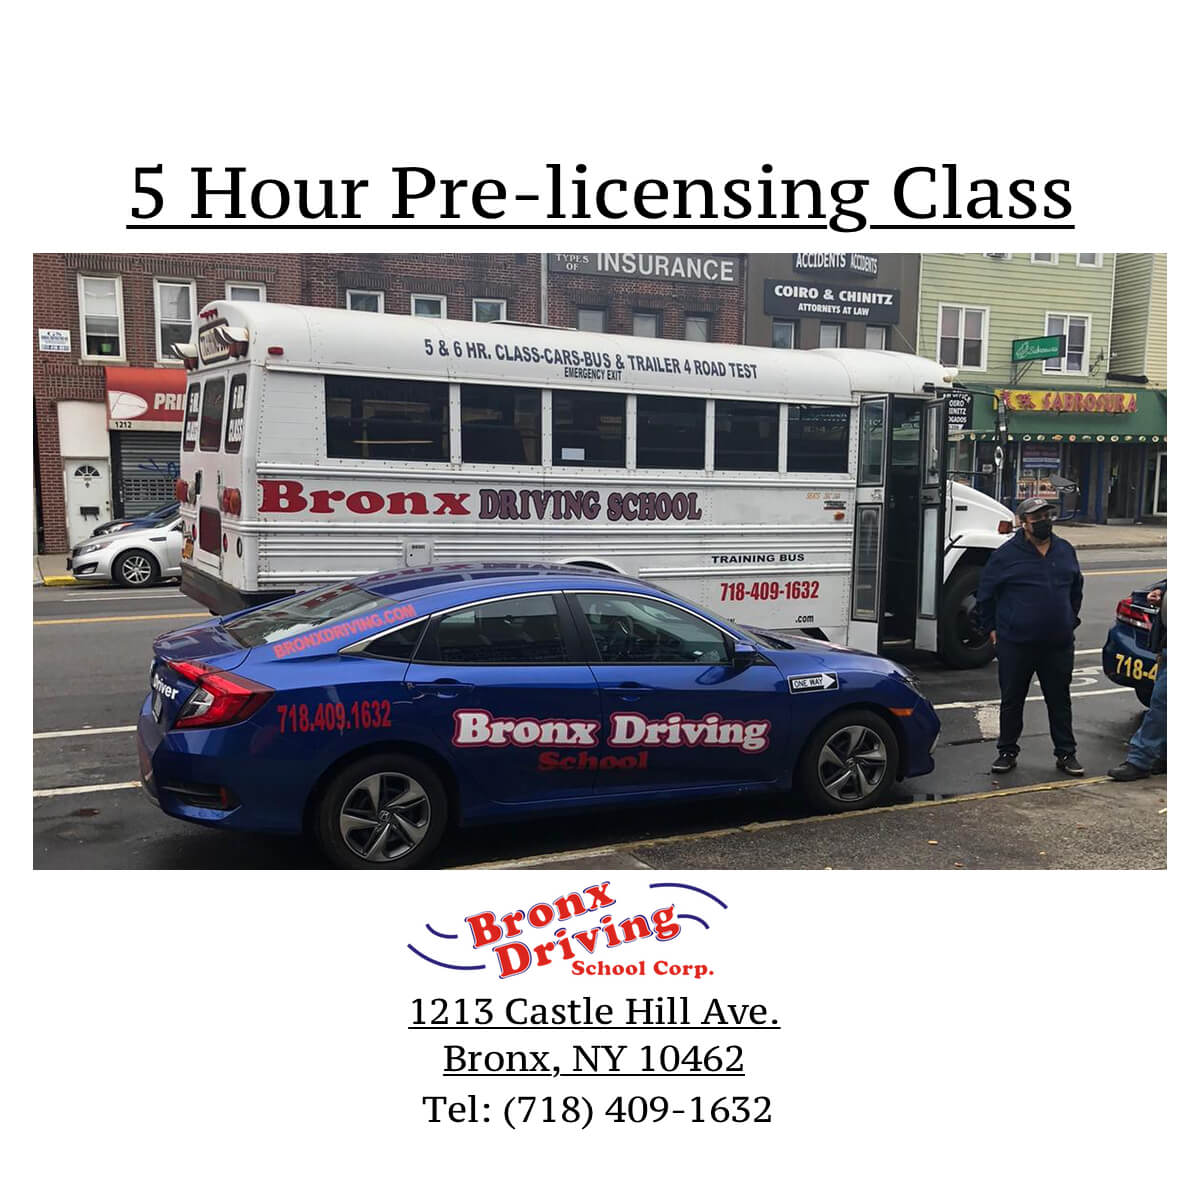 Bronx Driving School 5 Hour Pre-licensing Class